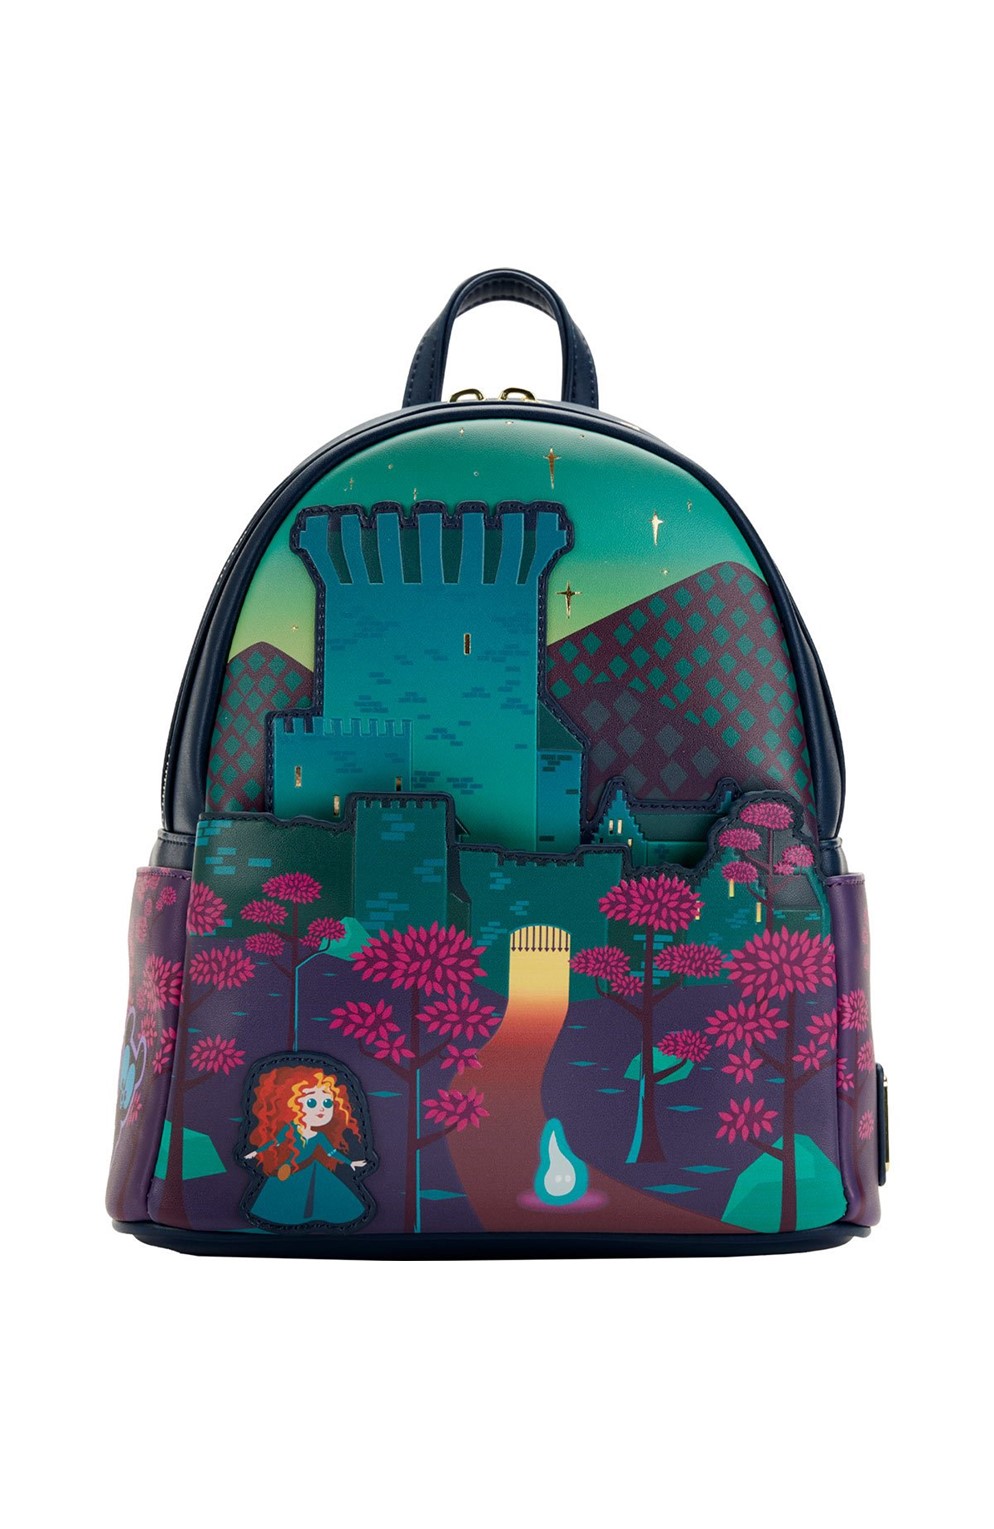 Brave Princess Castle Series Glow-In-The-Dark Mini-Backpack